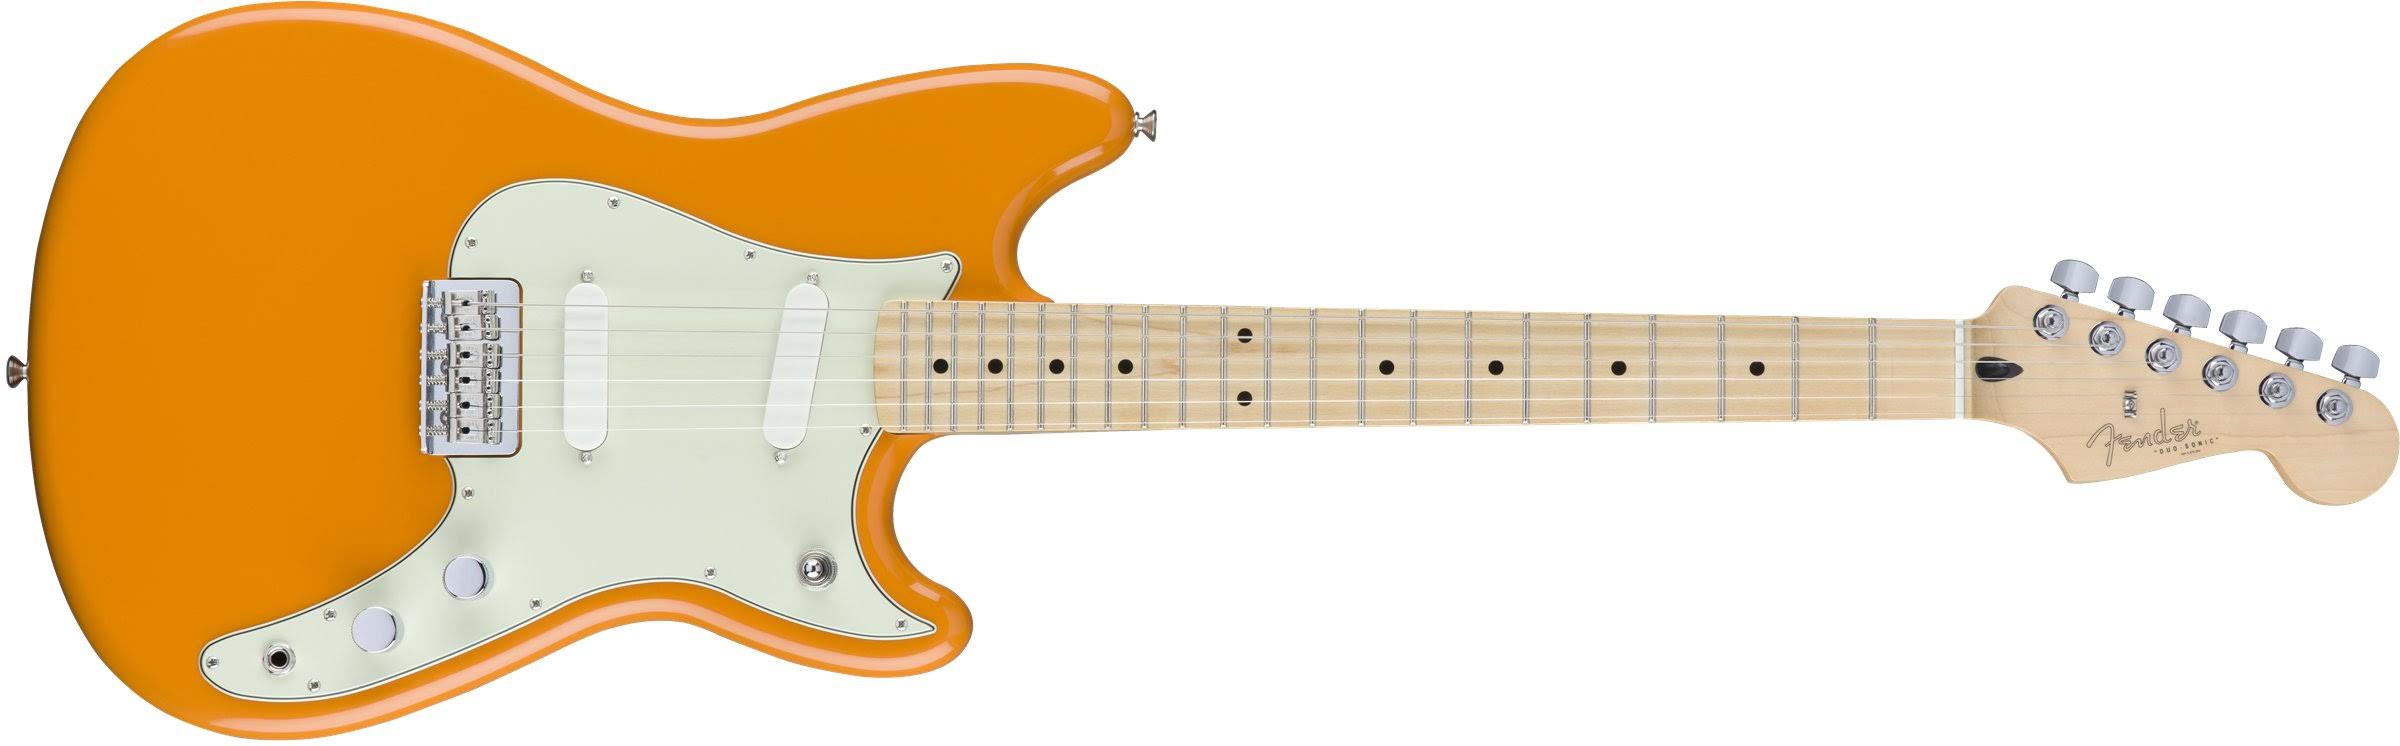 Duo Sonic Electric Guitar - Capri Orange, Maple Fingerboard